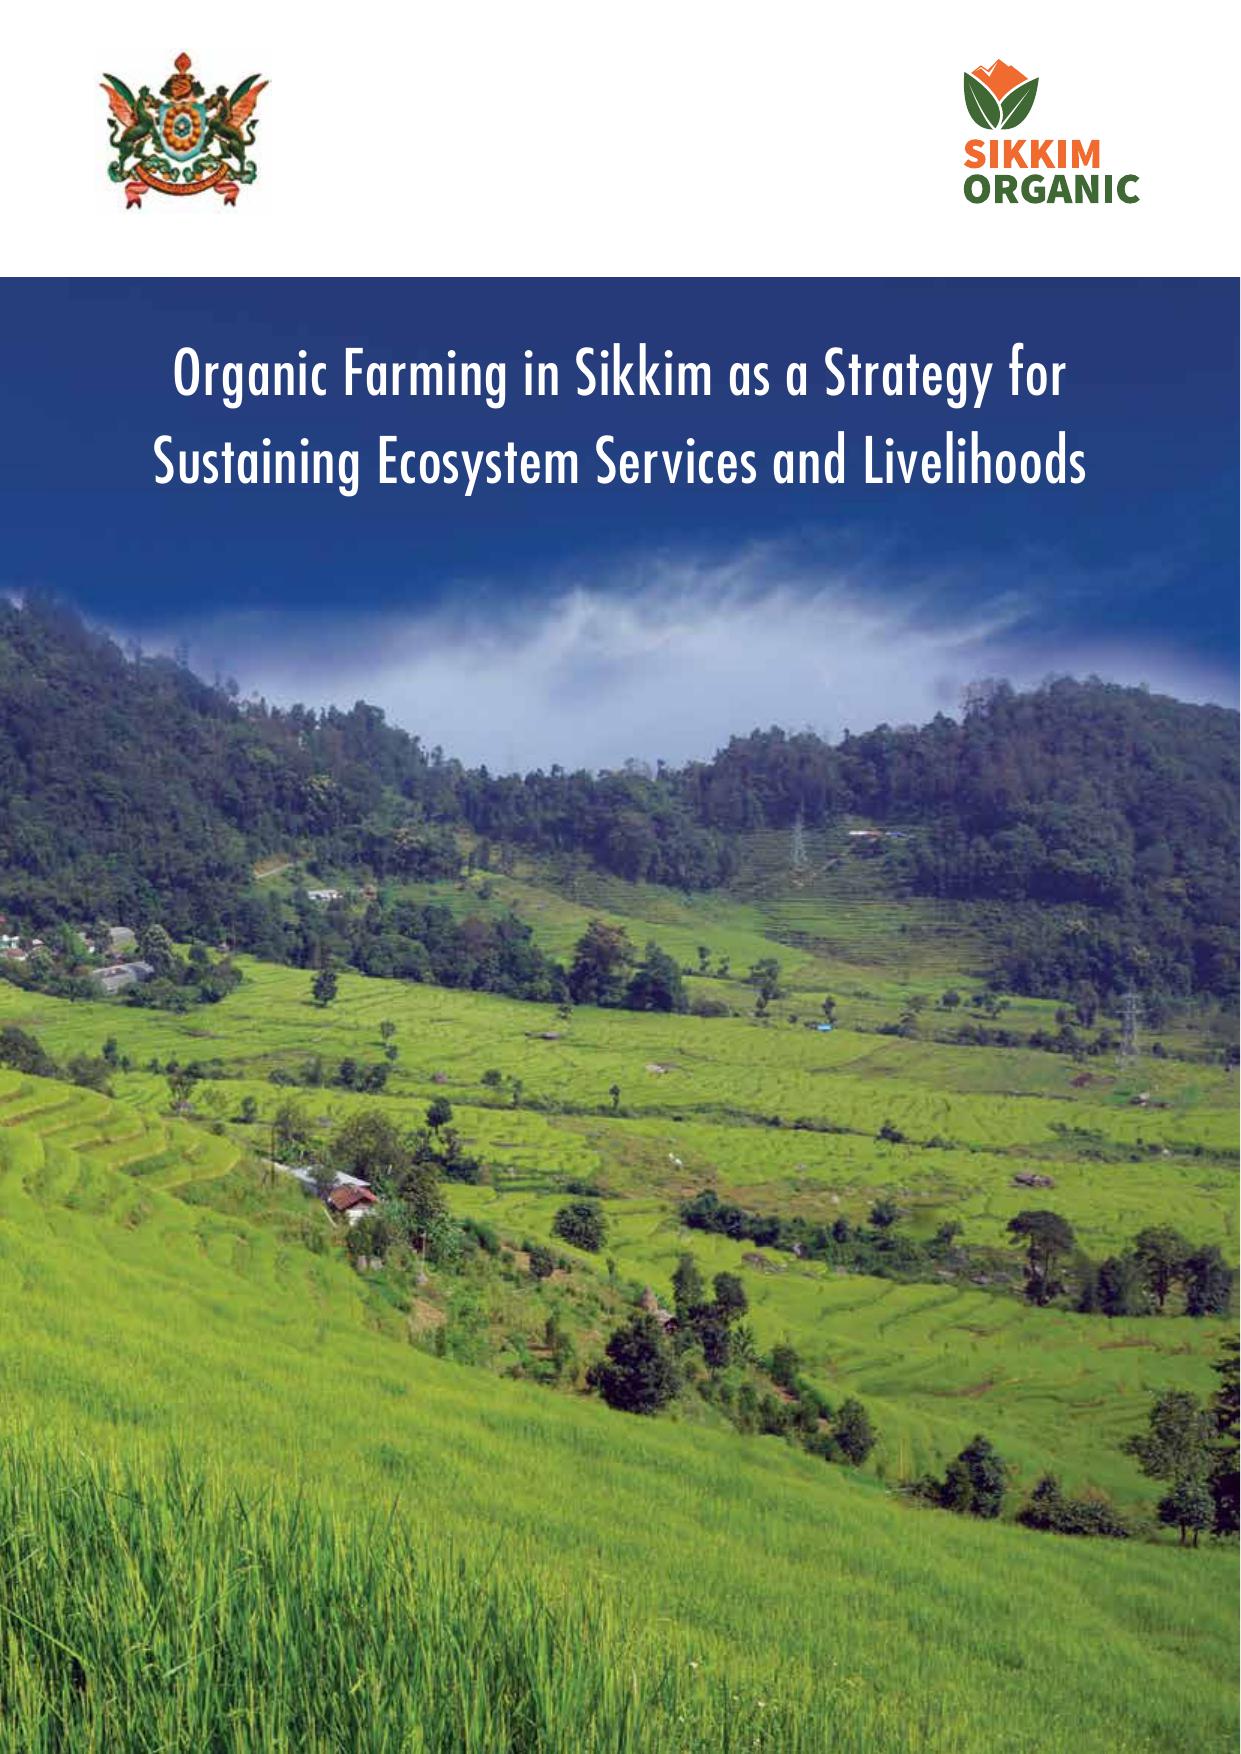 case study on organic farming in sikkim